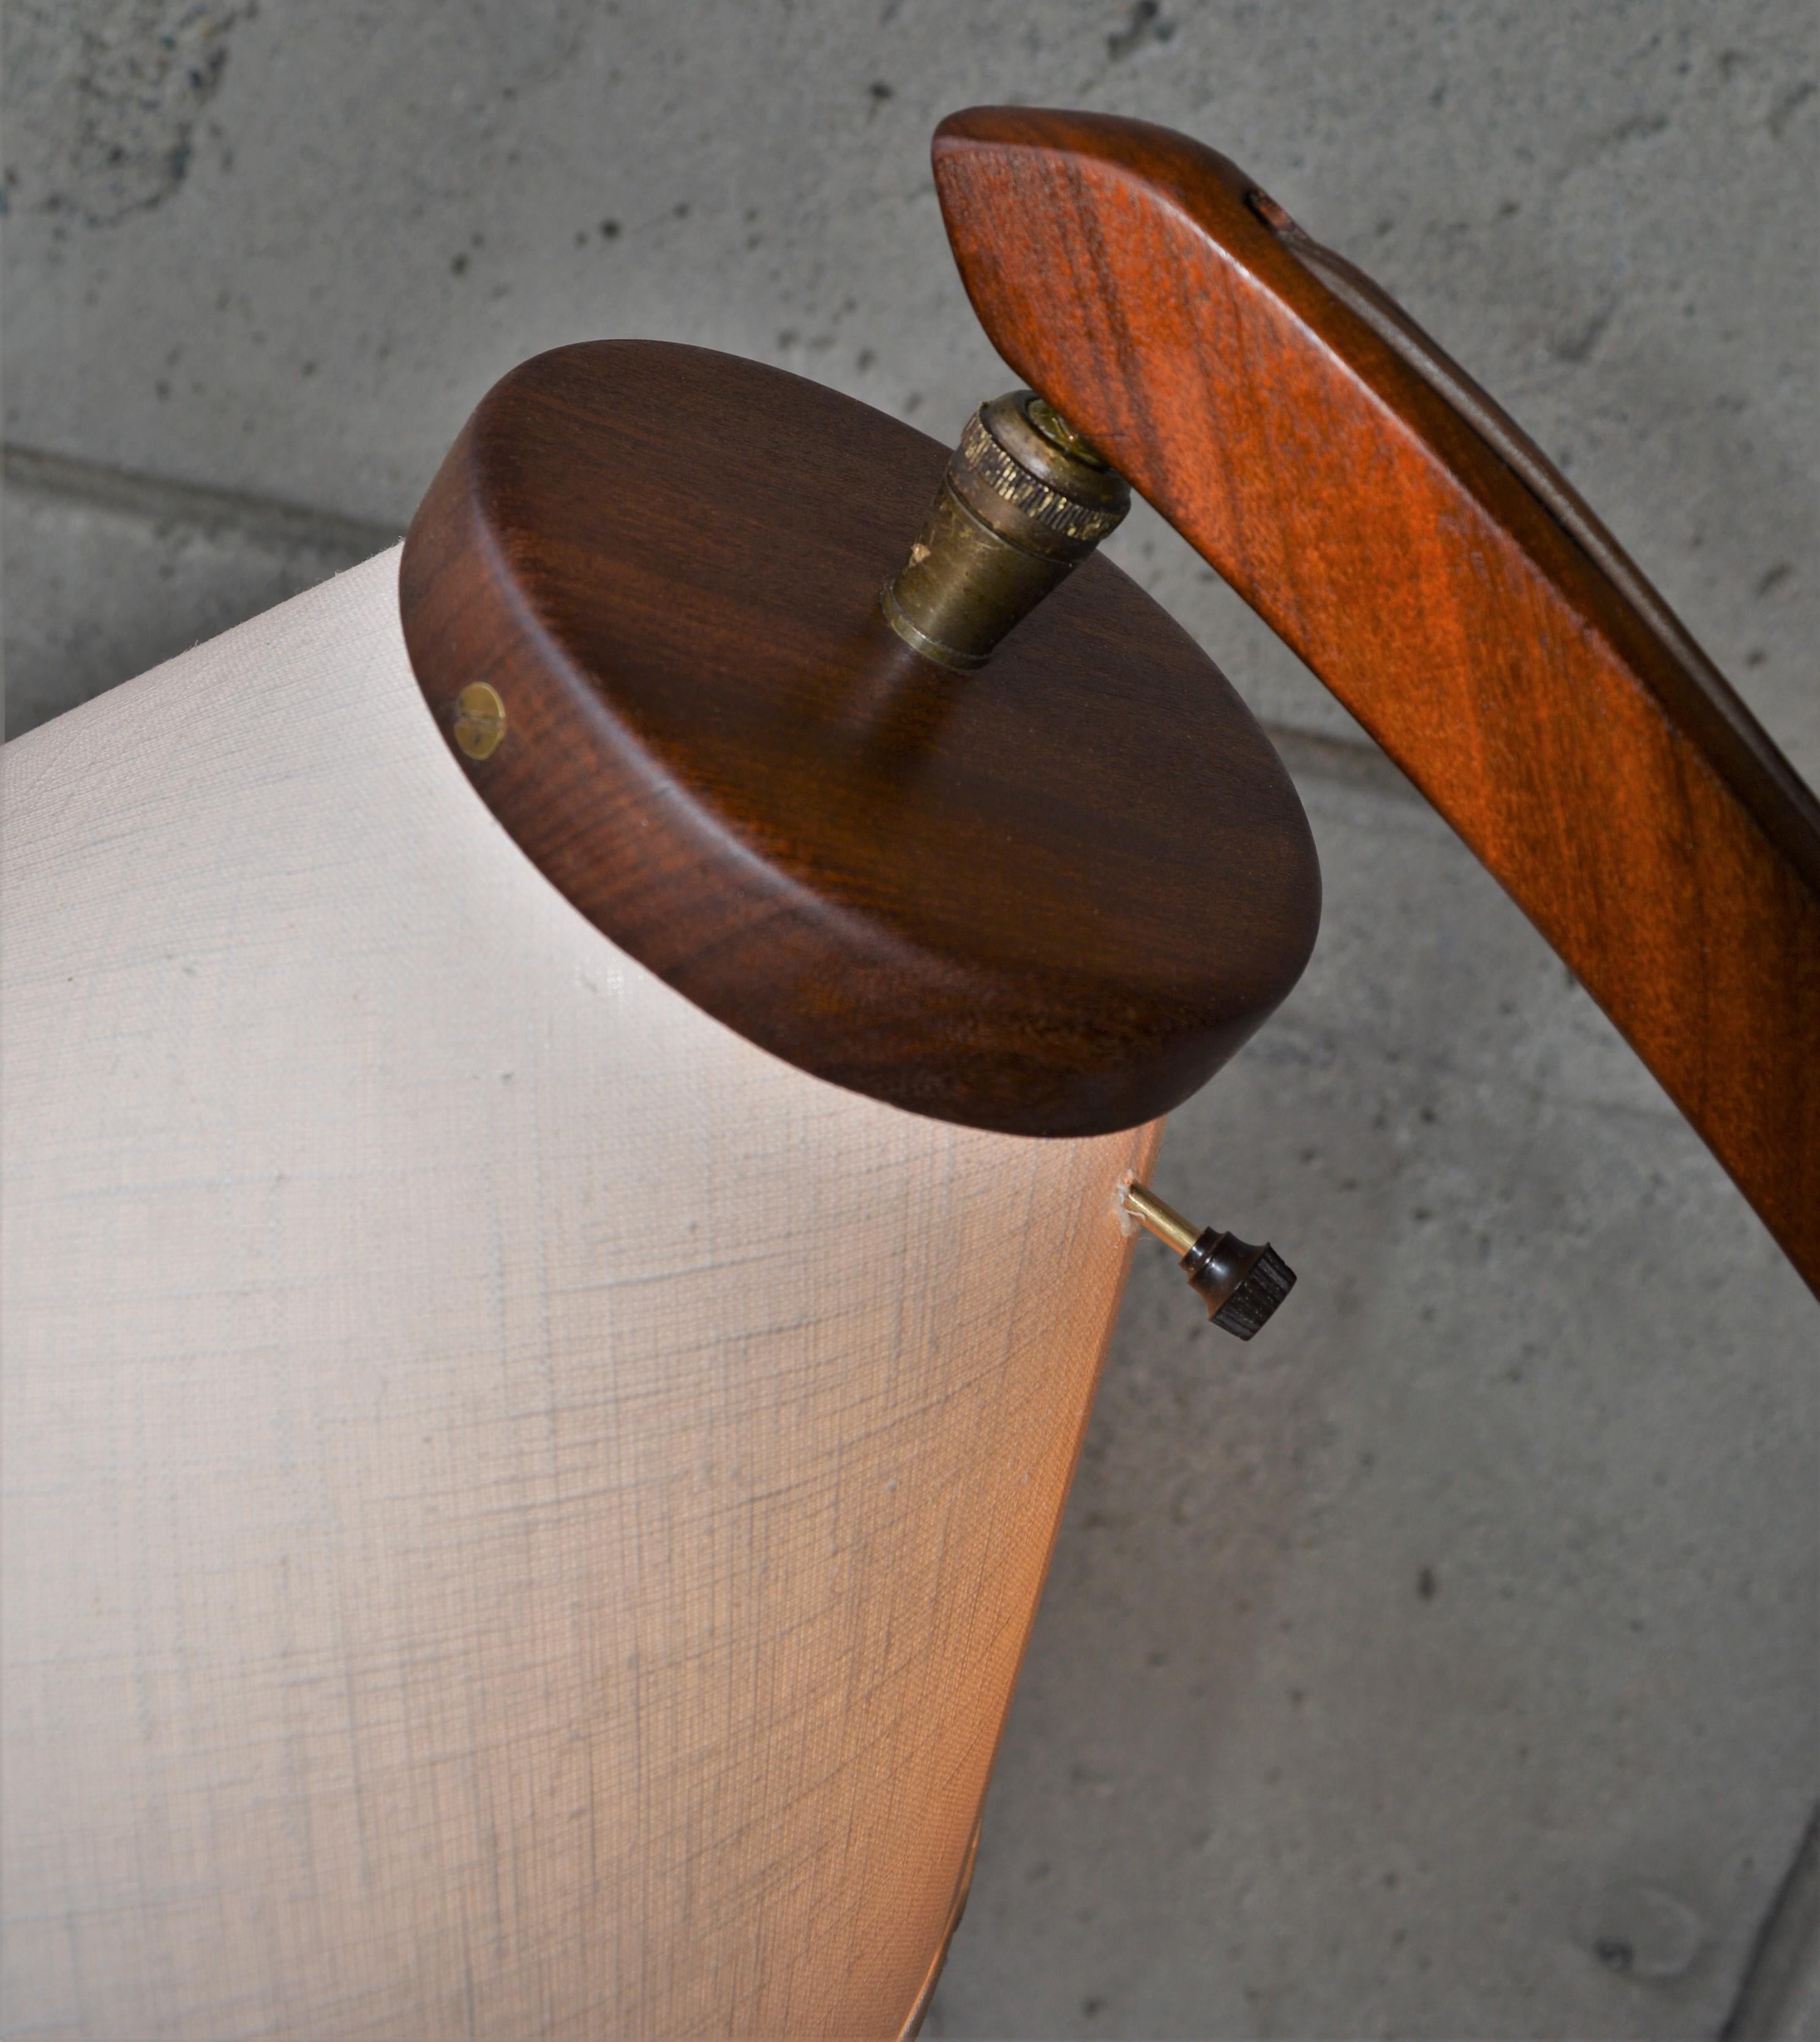 Mid-Century Modern Danish Teak Arc or Bow Tripod Floor Lamp with New Bonnet Shade, Rispal Style